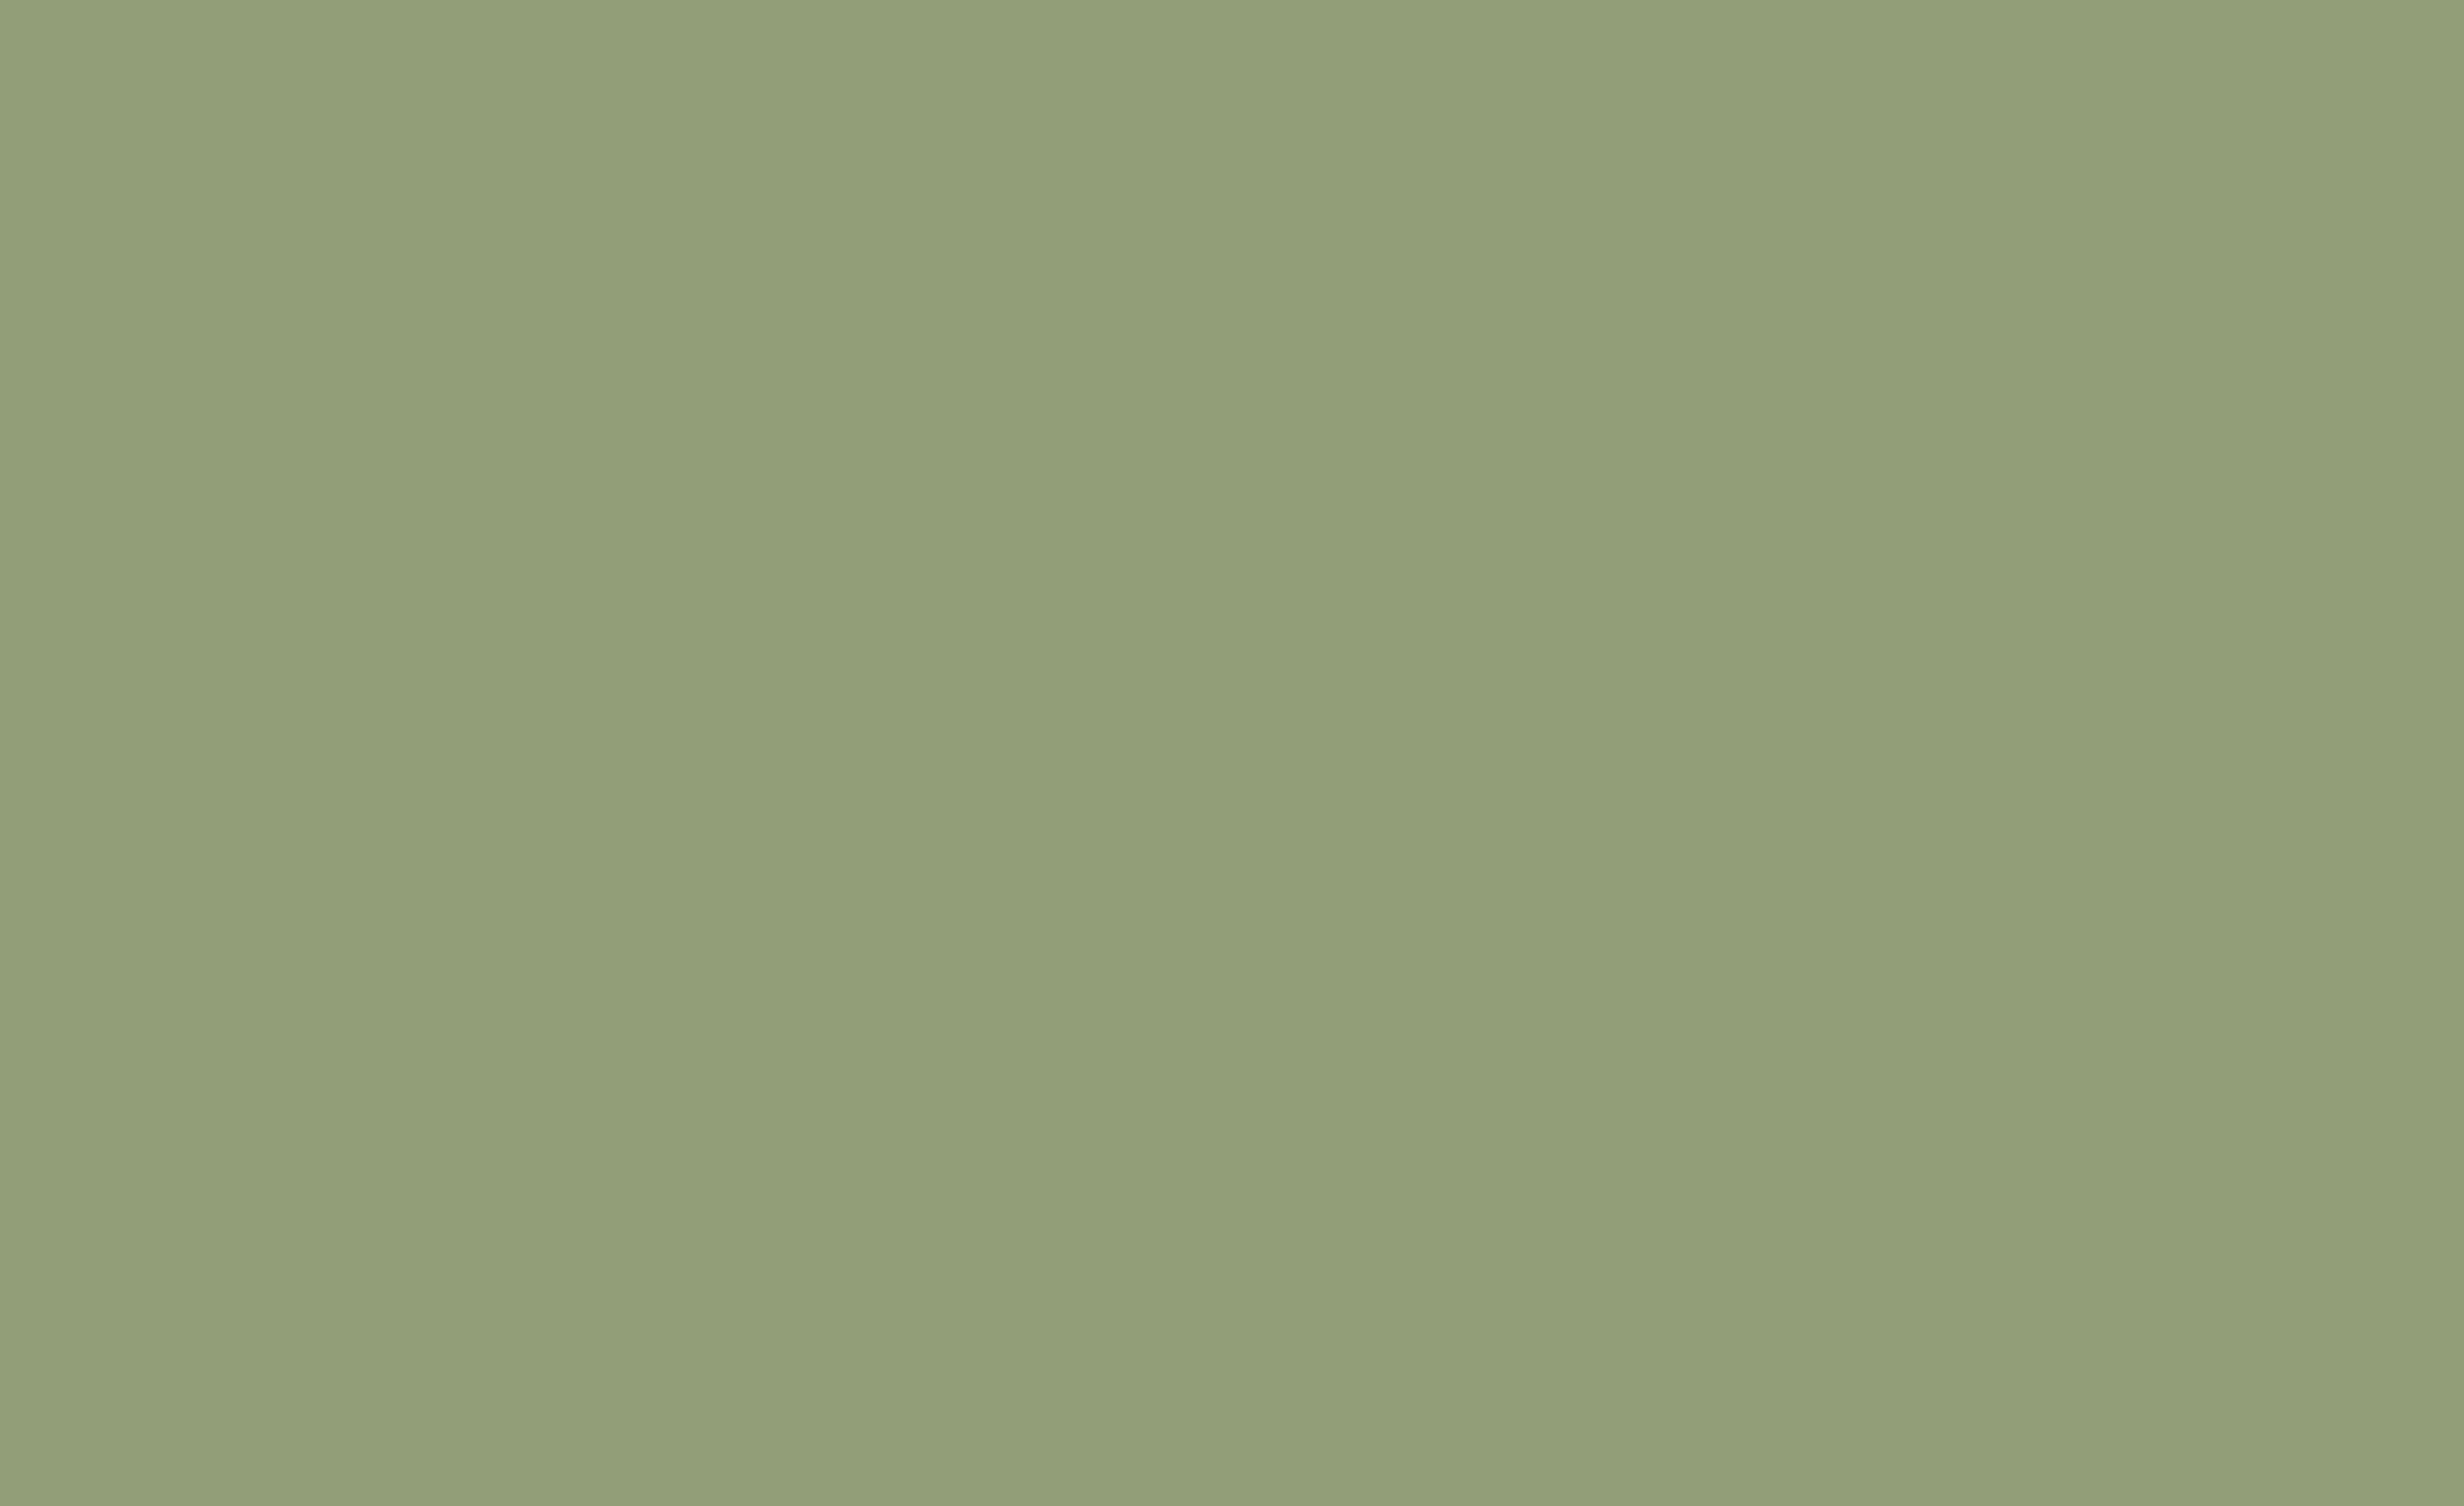 Couleur Artichaut : Vert moyen chaleureux et lumineux. 